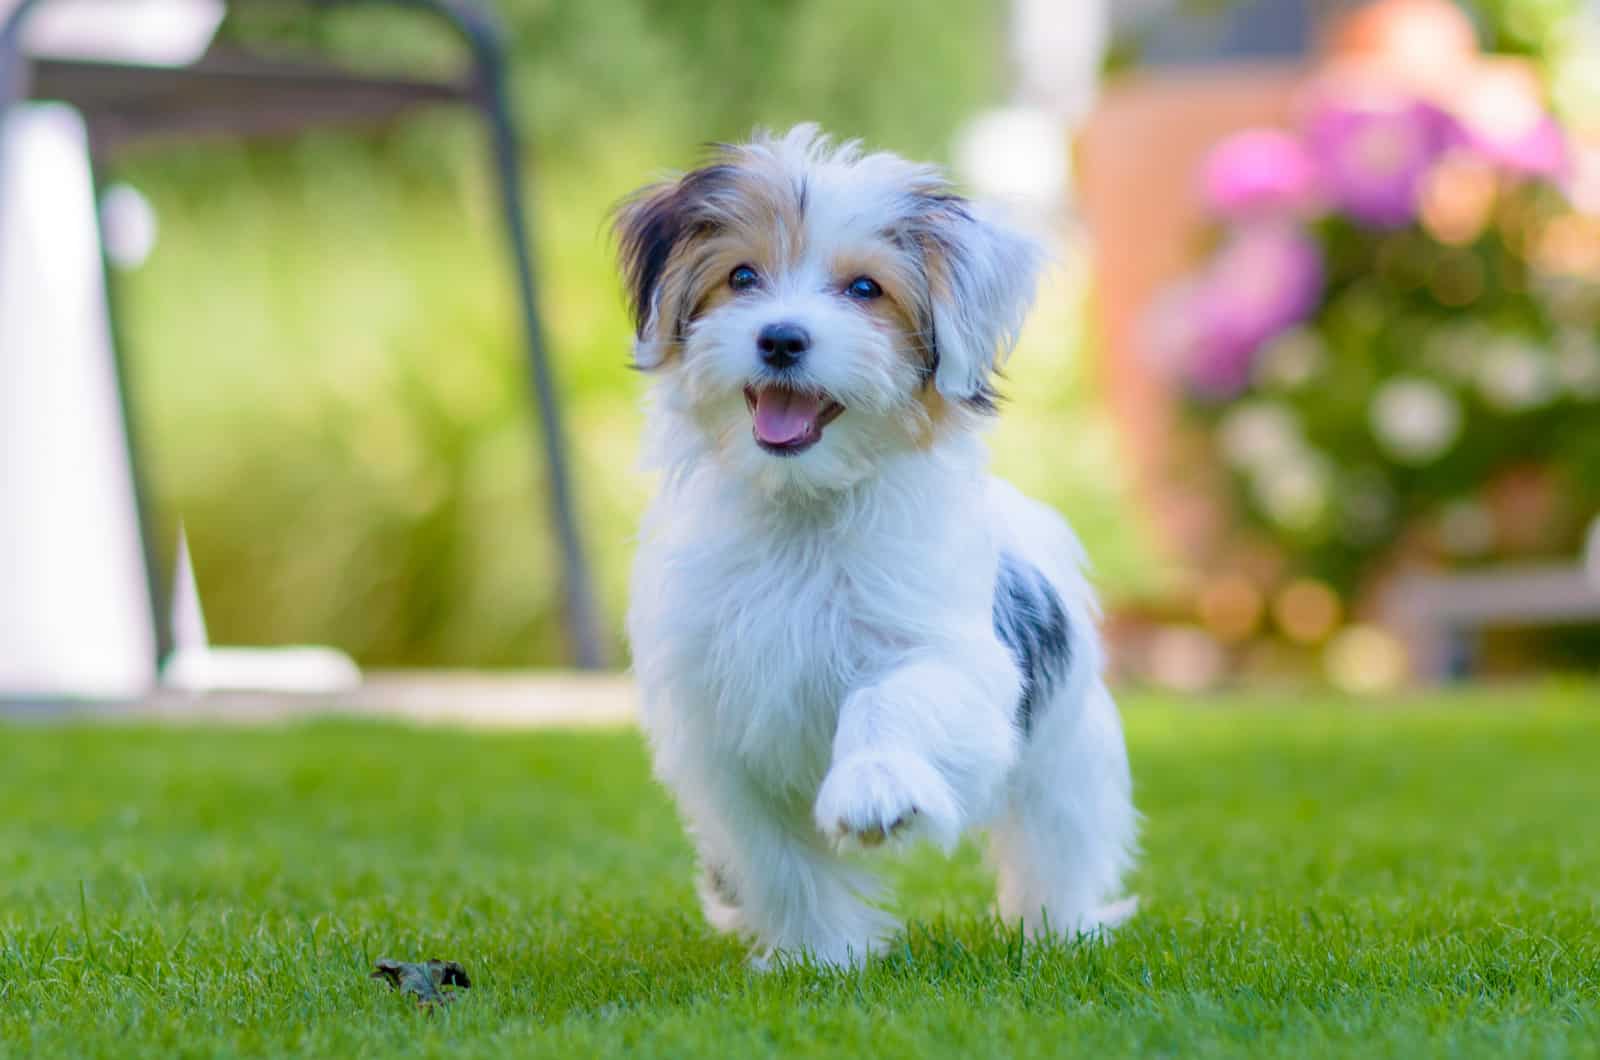 havanese puppy running on the grass